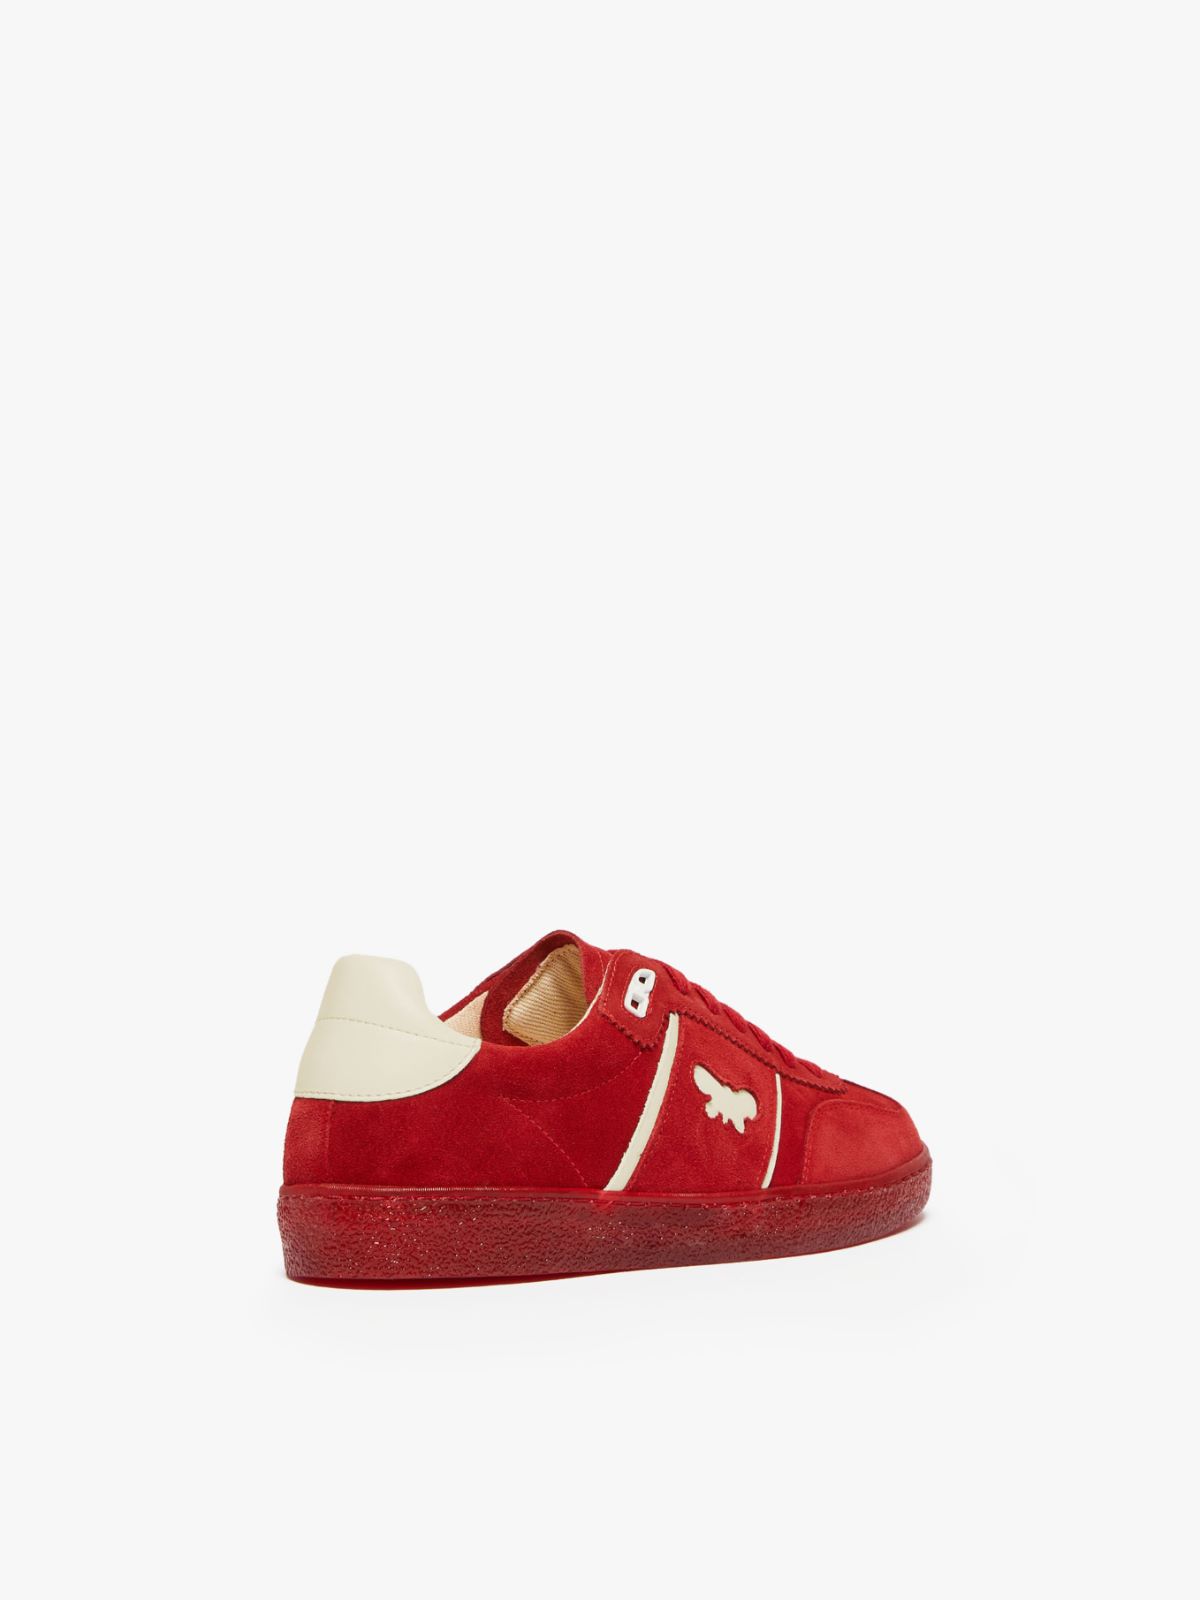 Leather sneakers - RED - Weekend Max Mara - 3